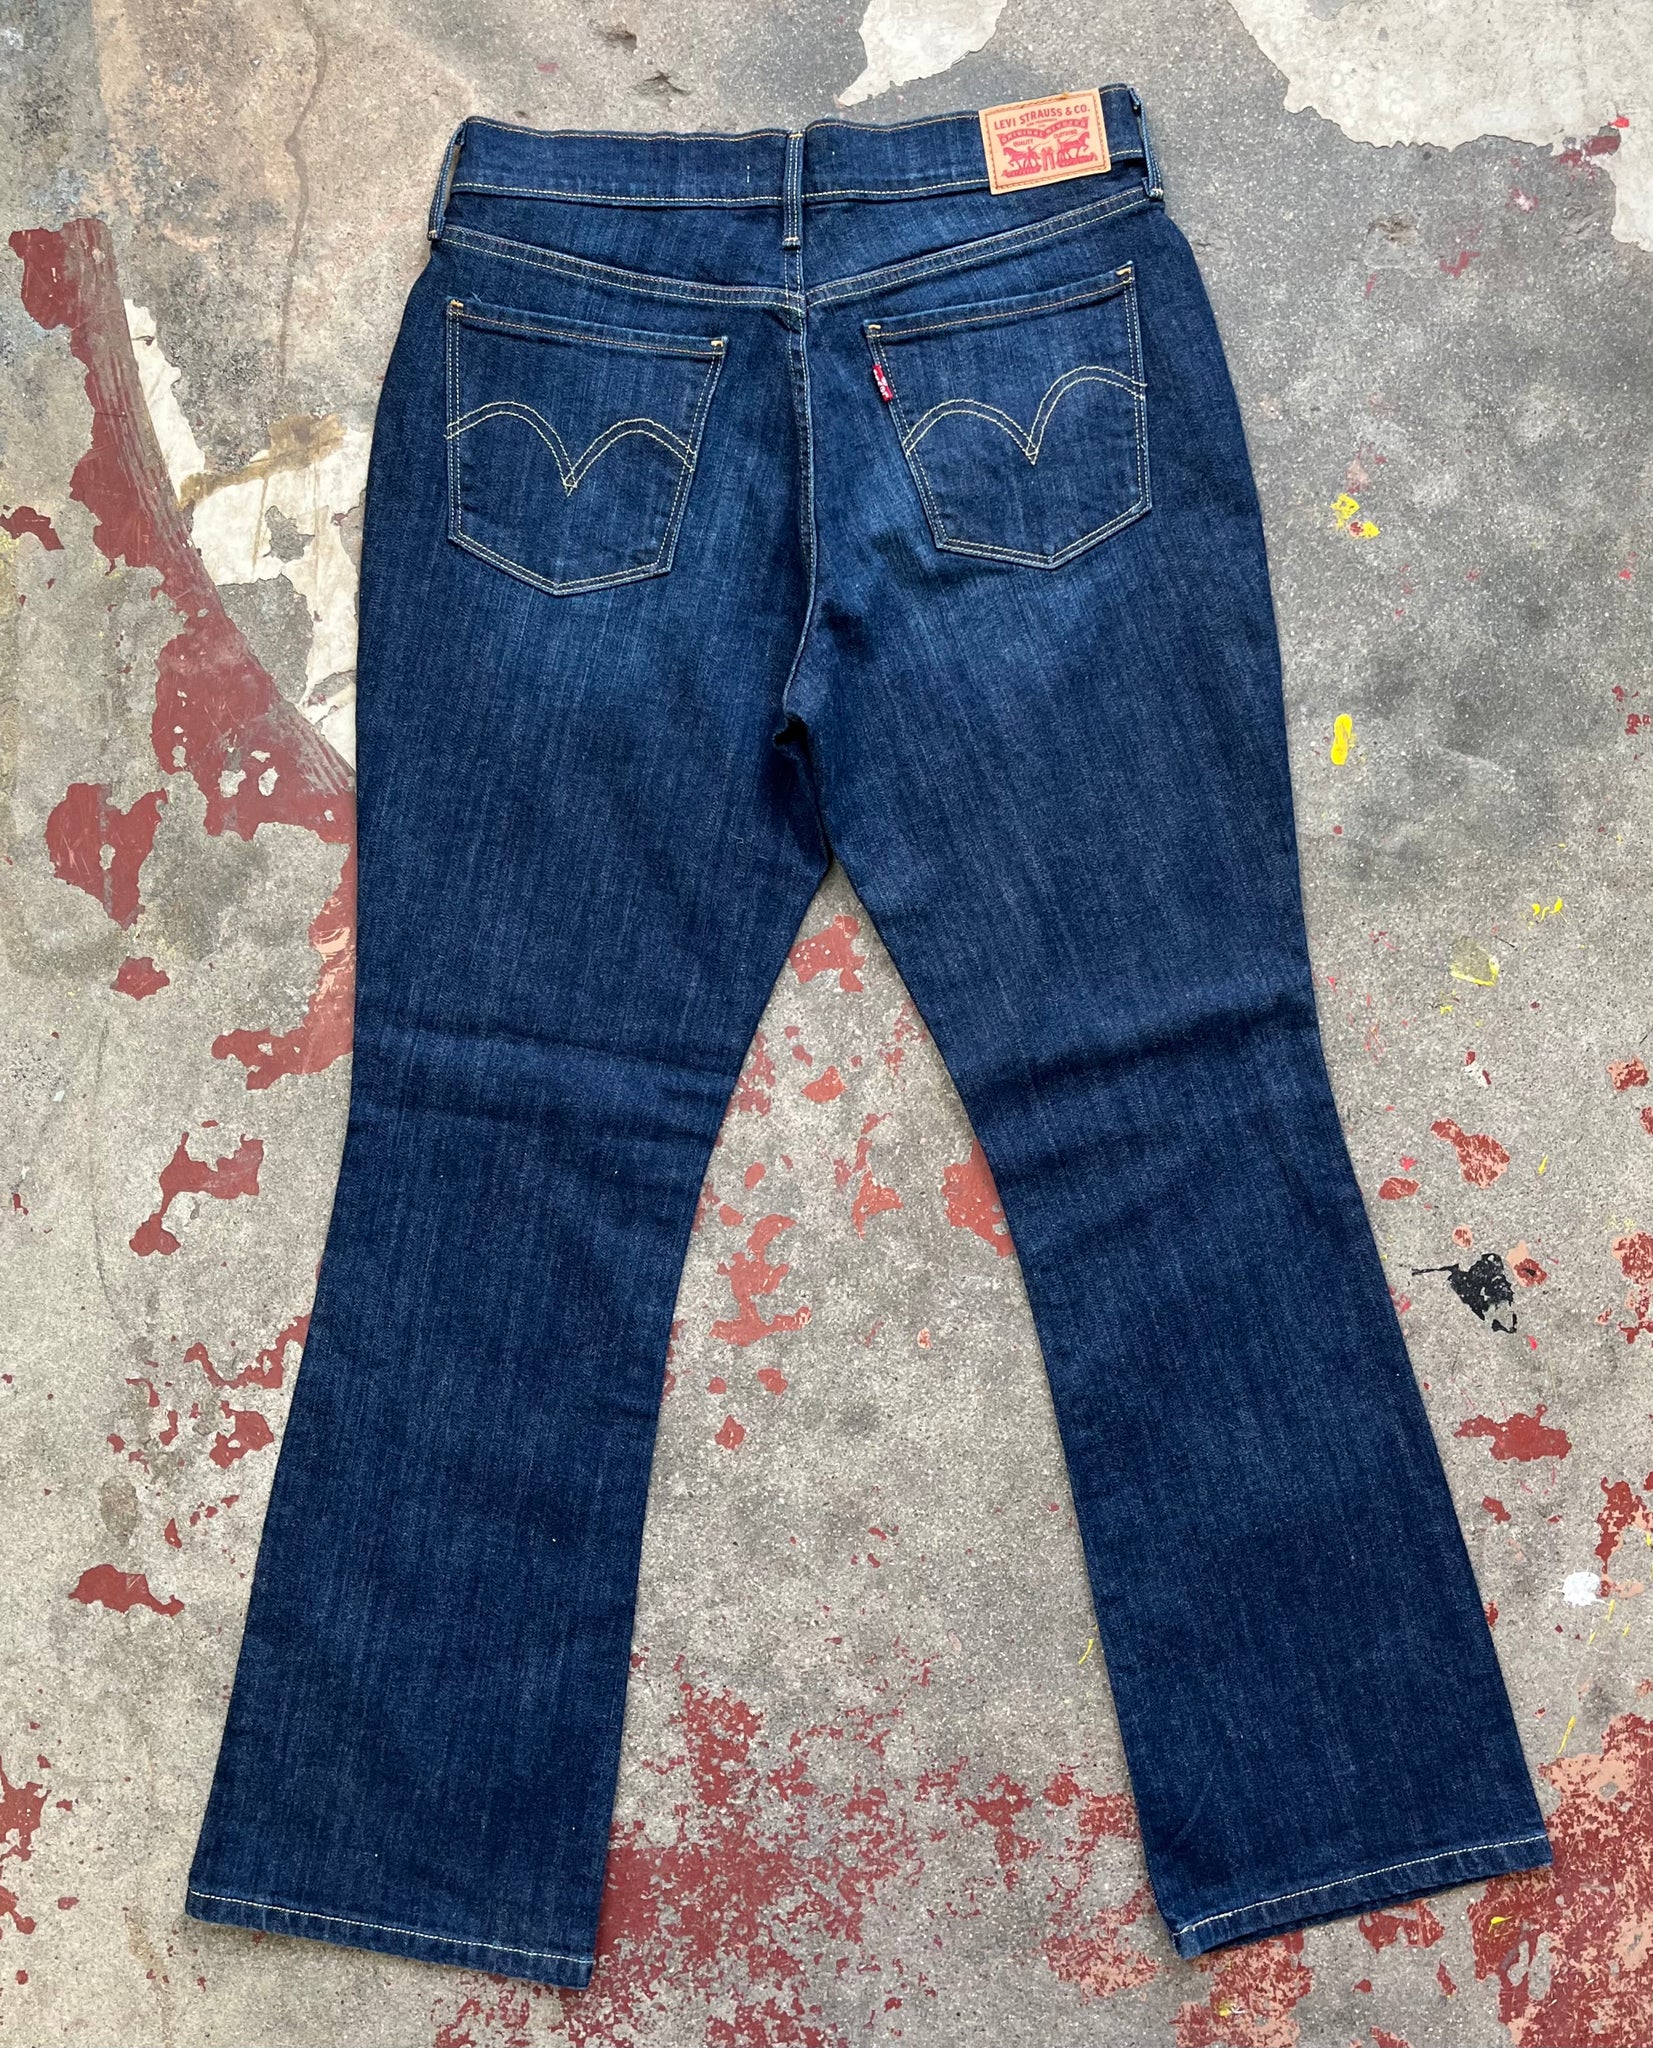 Levi's 515 Bootcut Jeans (JYJ-0146)